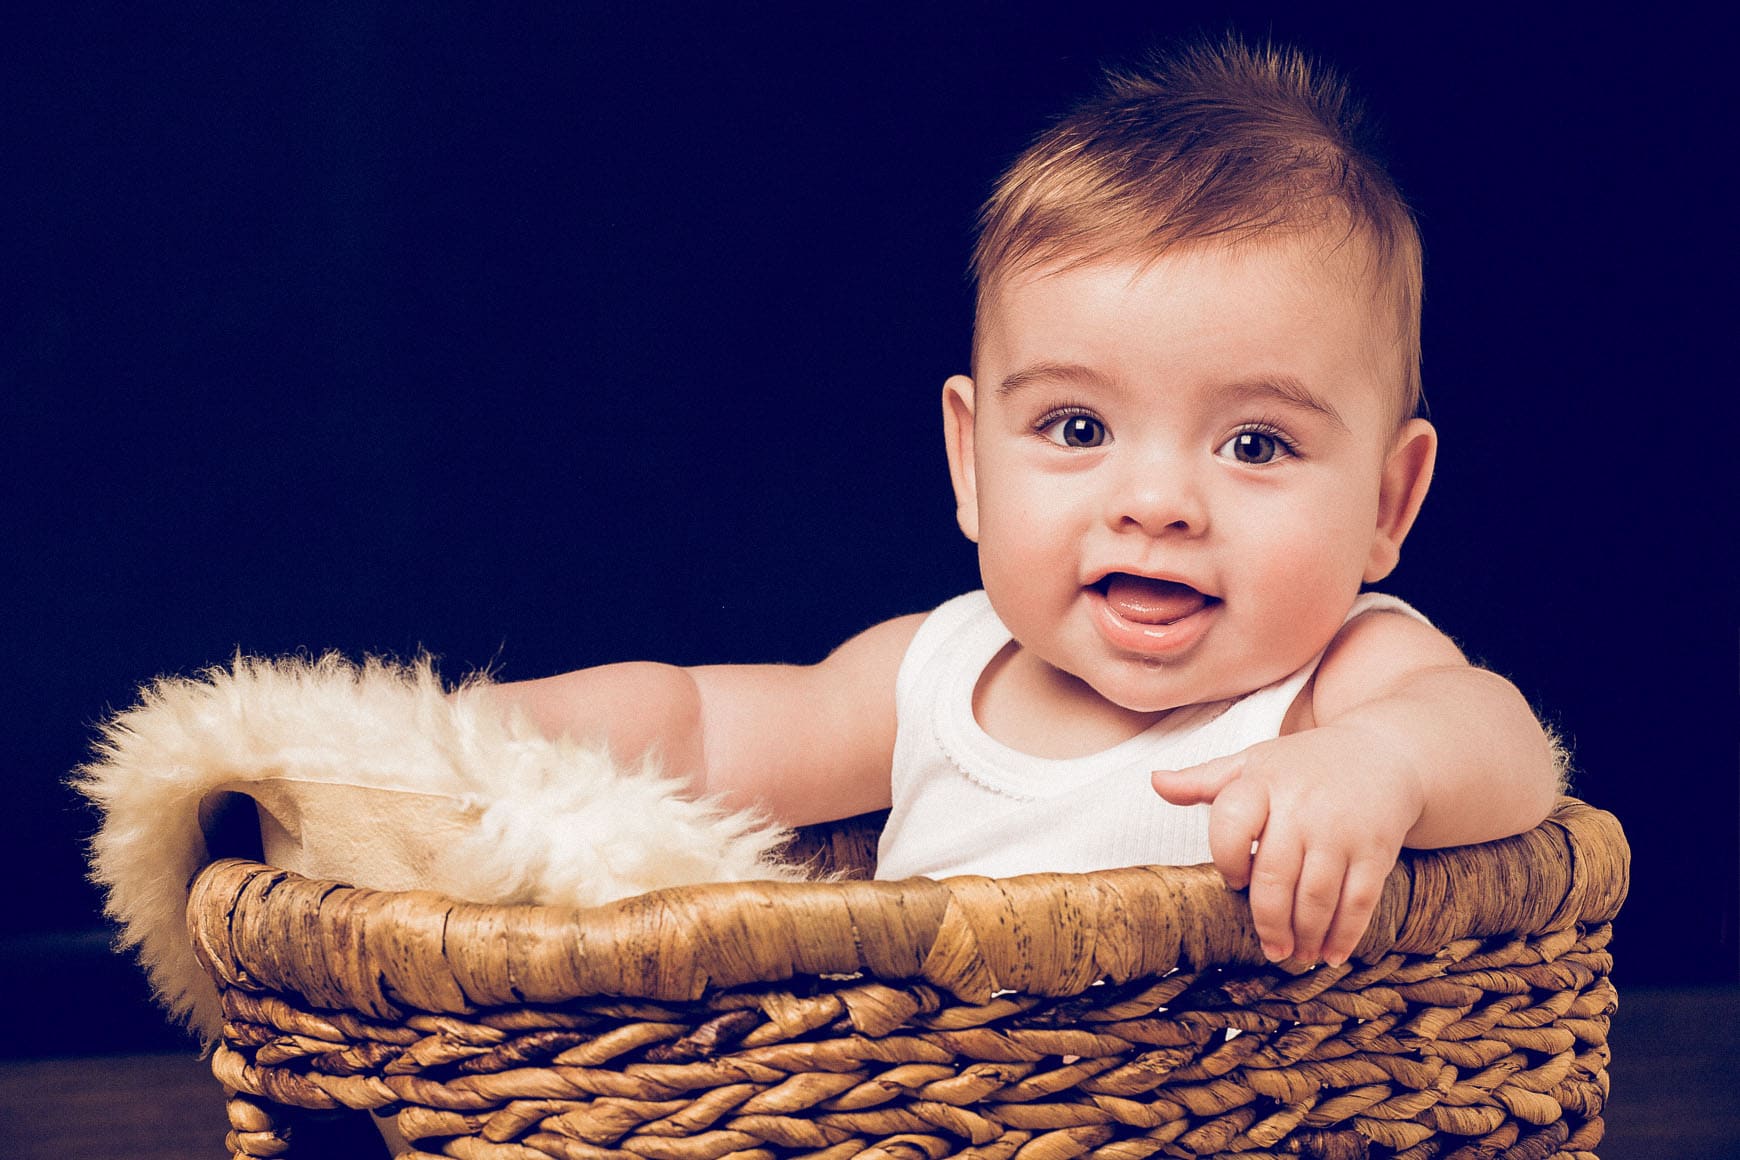 bebe de 9 meses sonriente dentro de un cesto